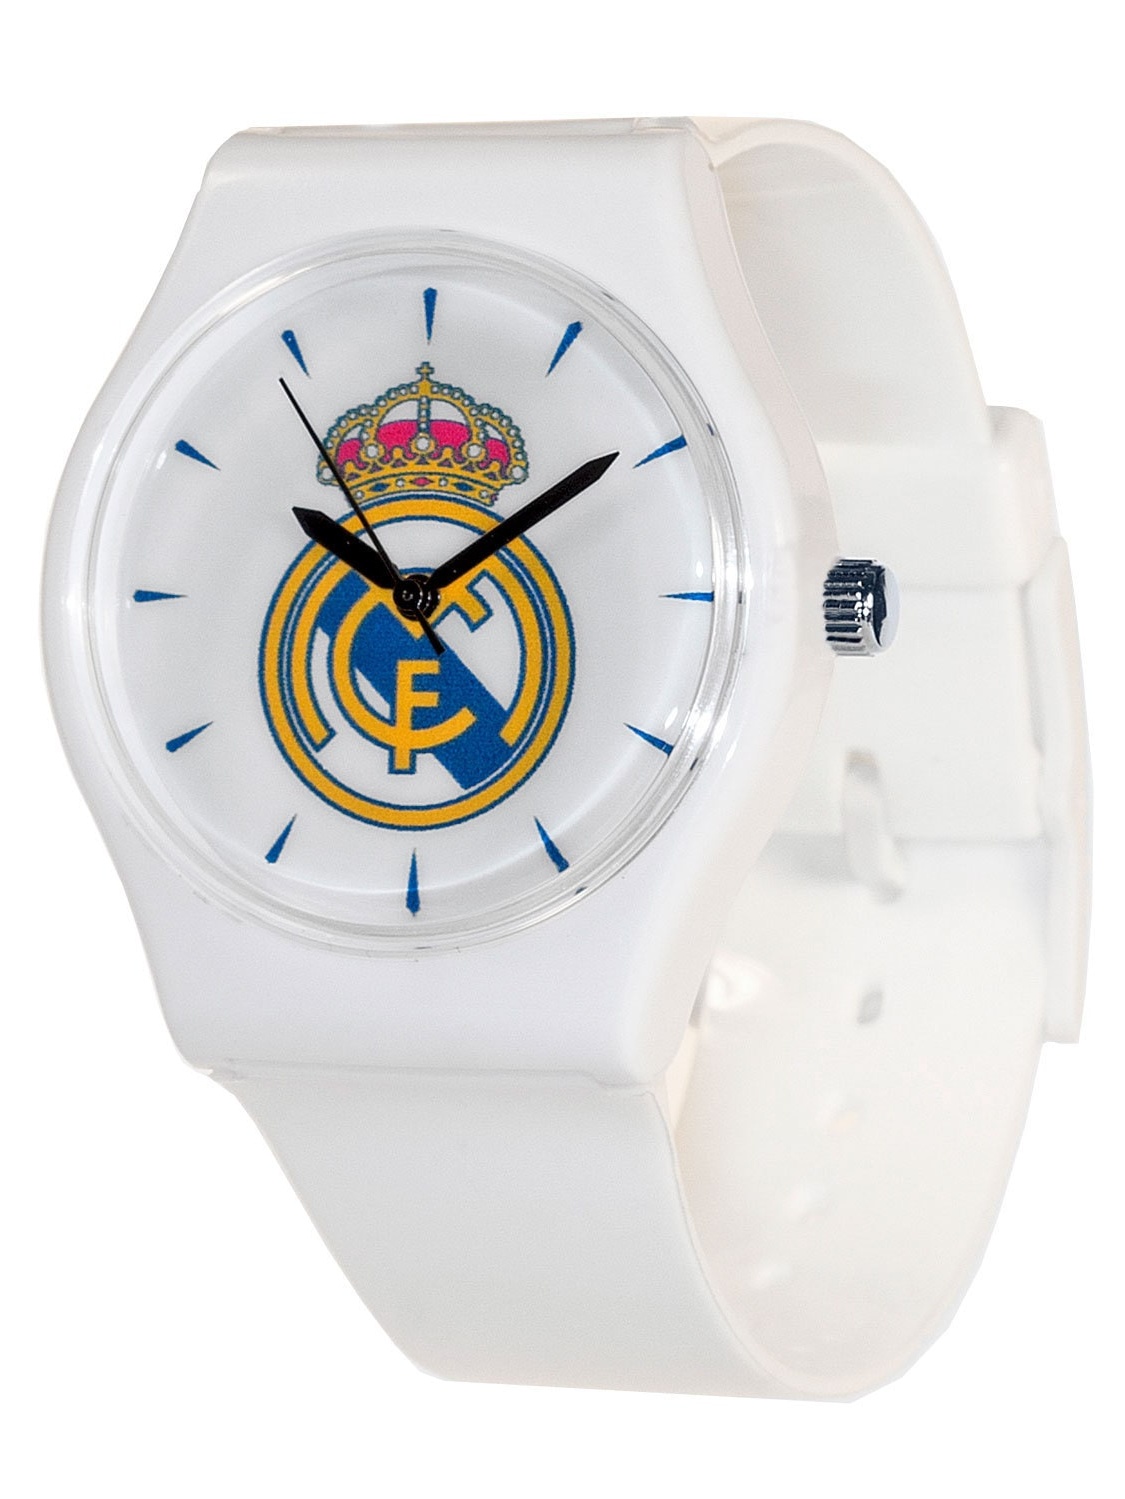 Real Madrid RM38-W Soccer Club Slimline Souvenir Watch, White